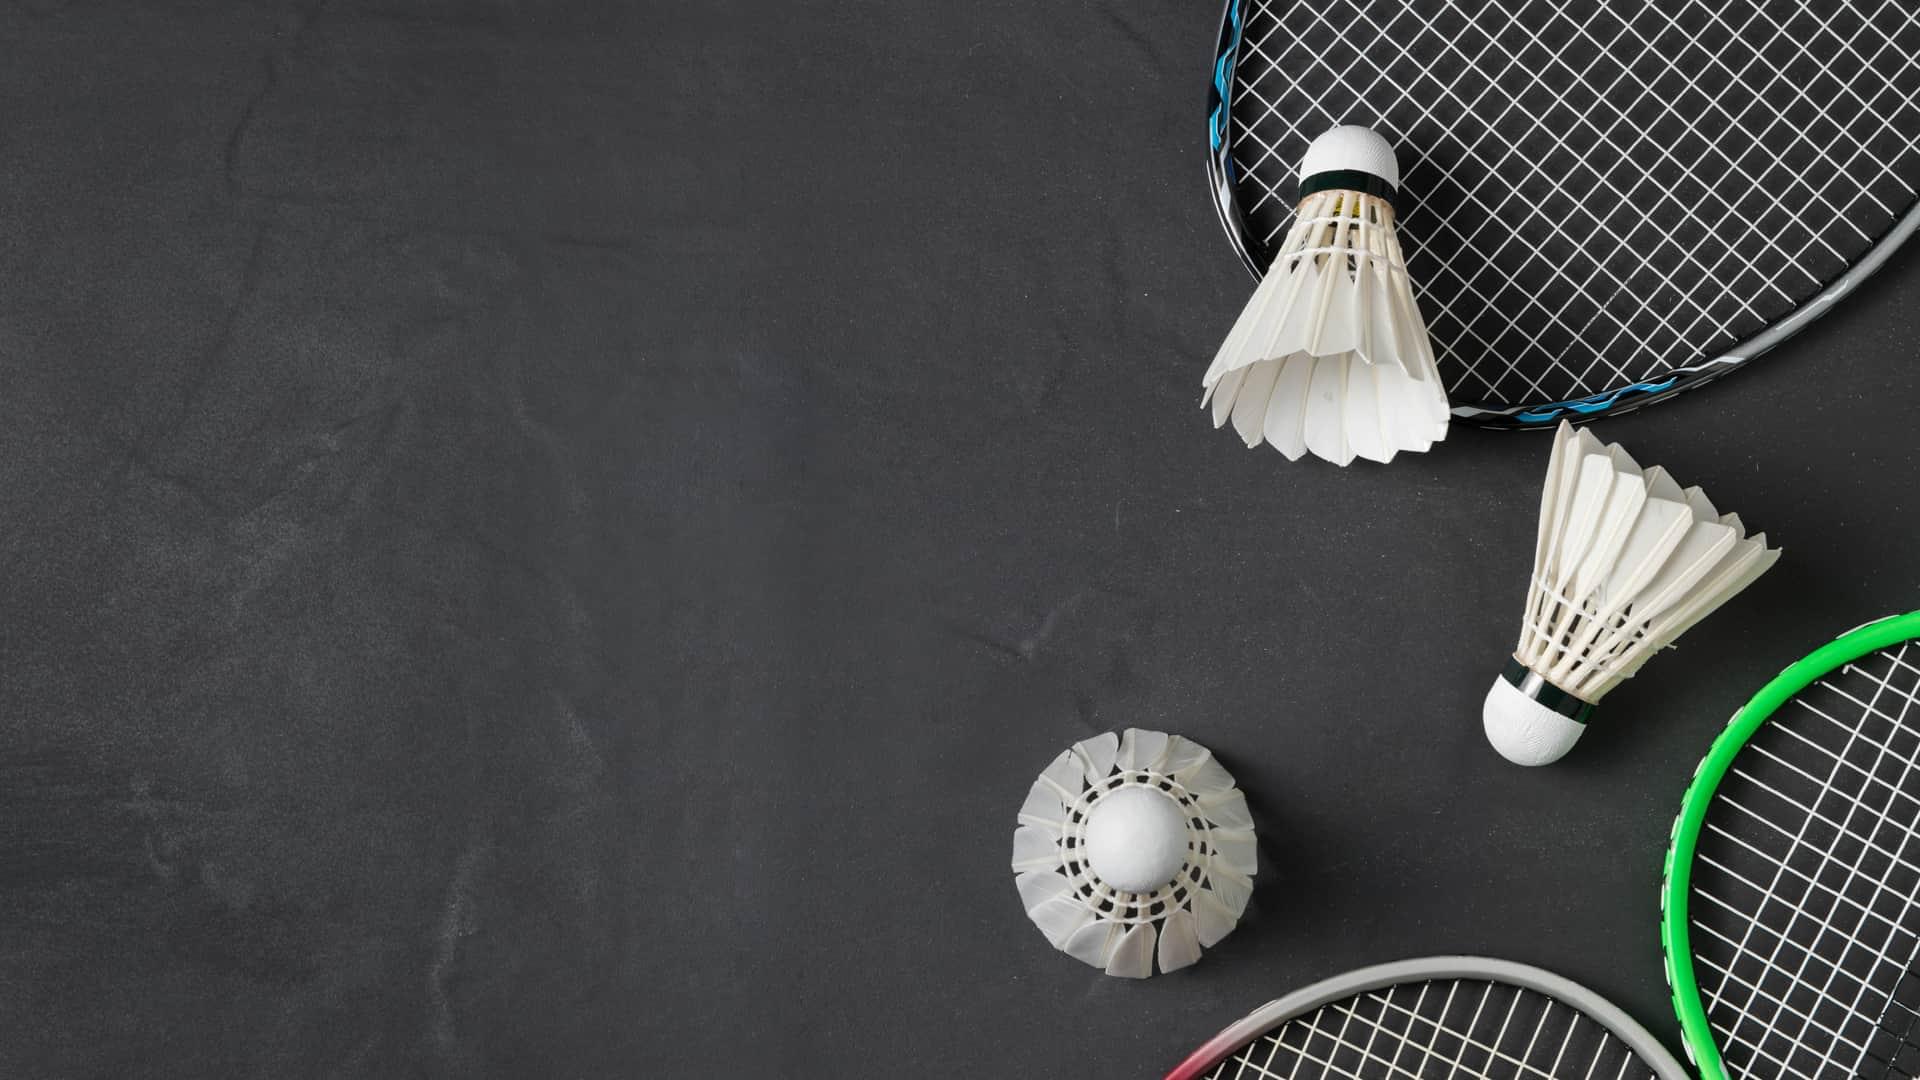 Three badminton birdies and rackets